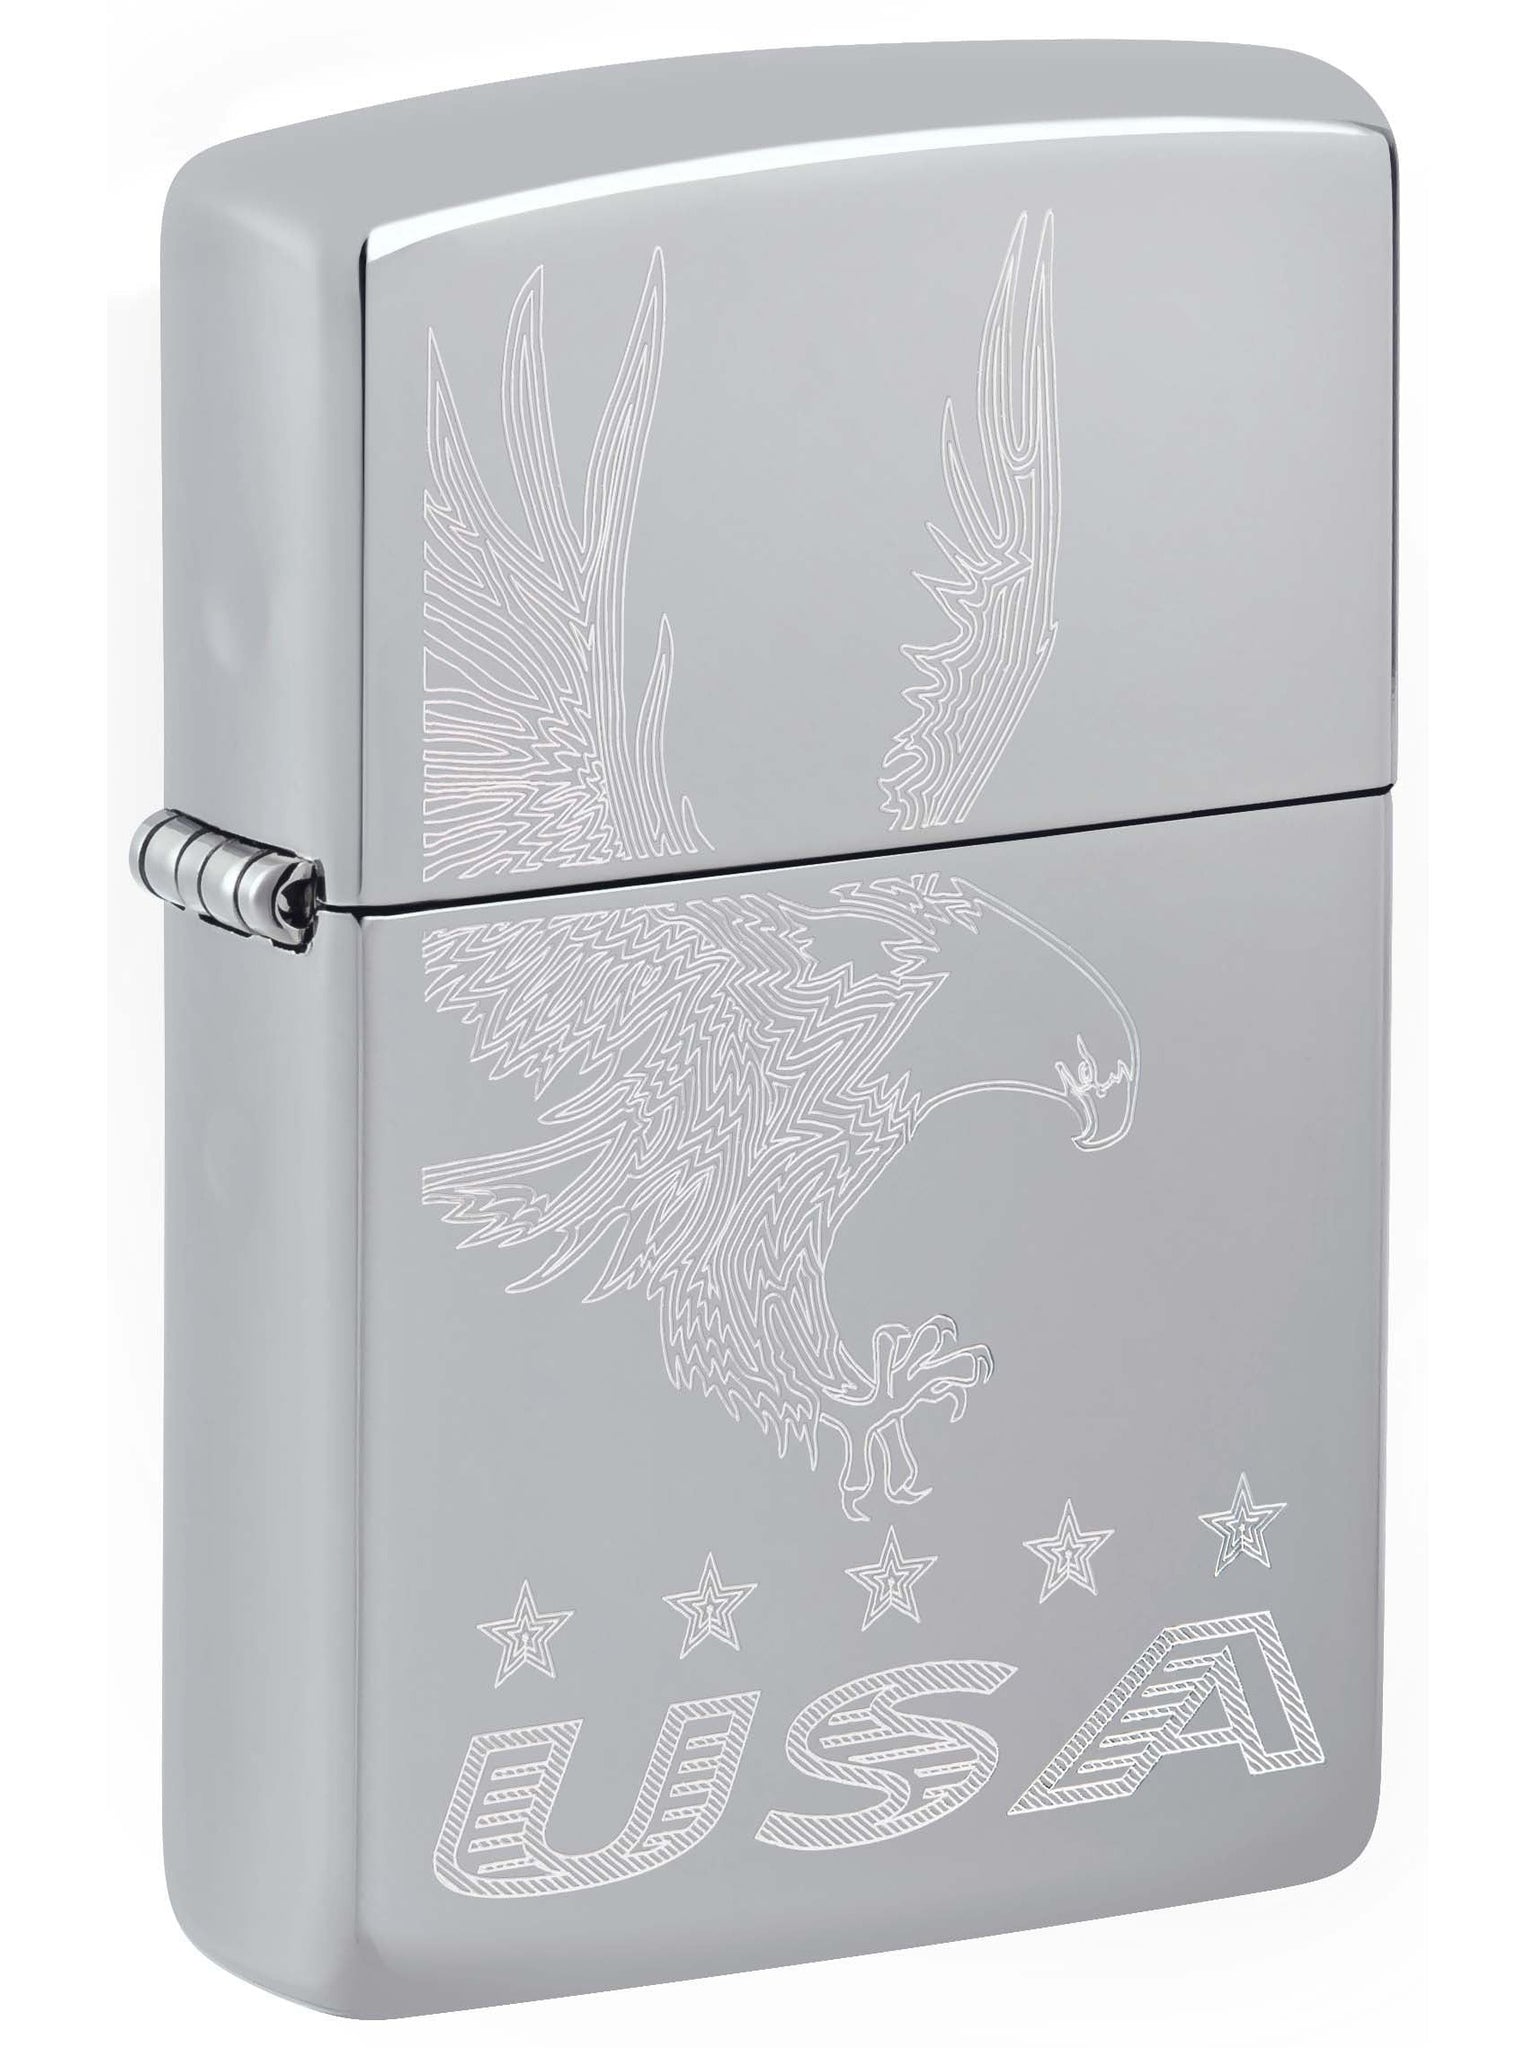 Zippo Lighter: Engraved Eagle and USA - High Polish Chrome 81159